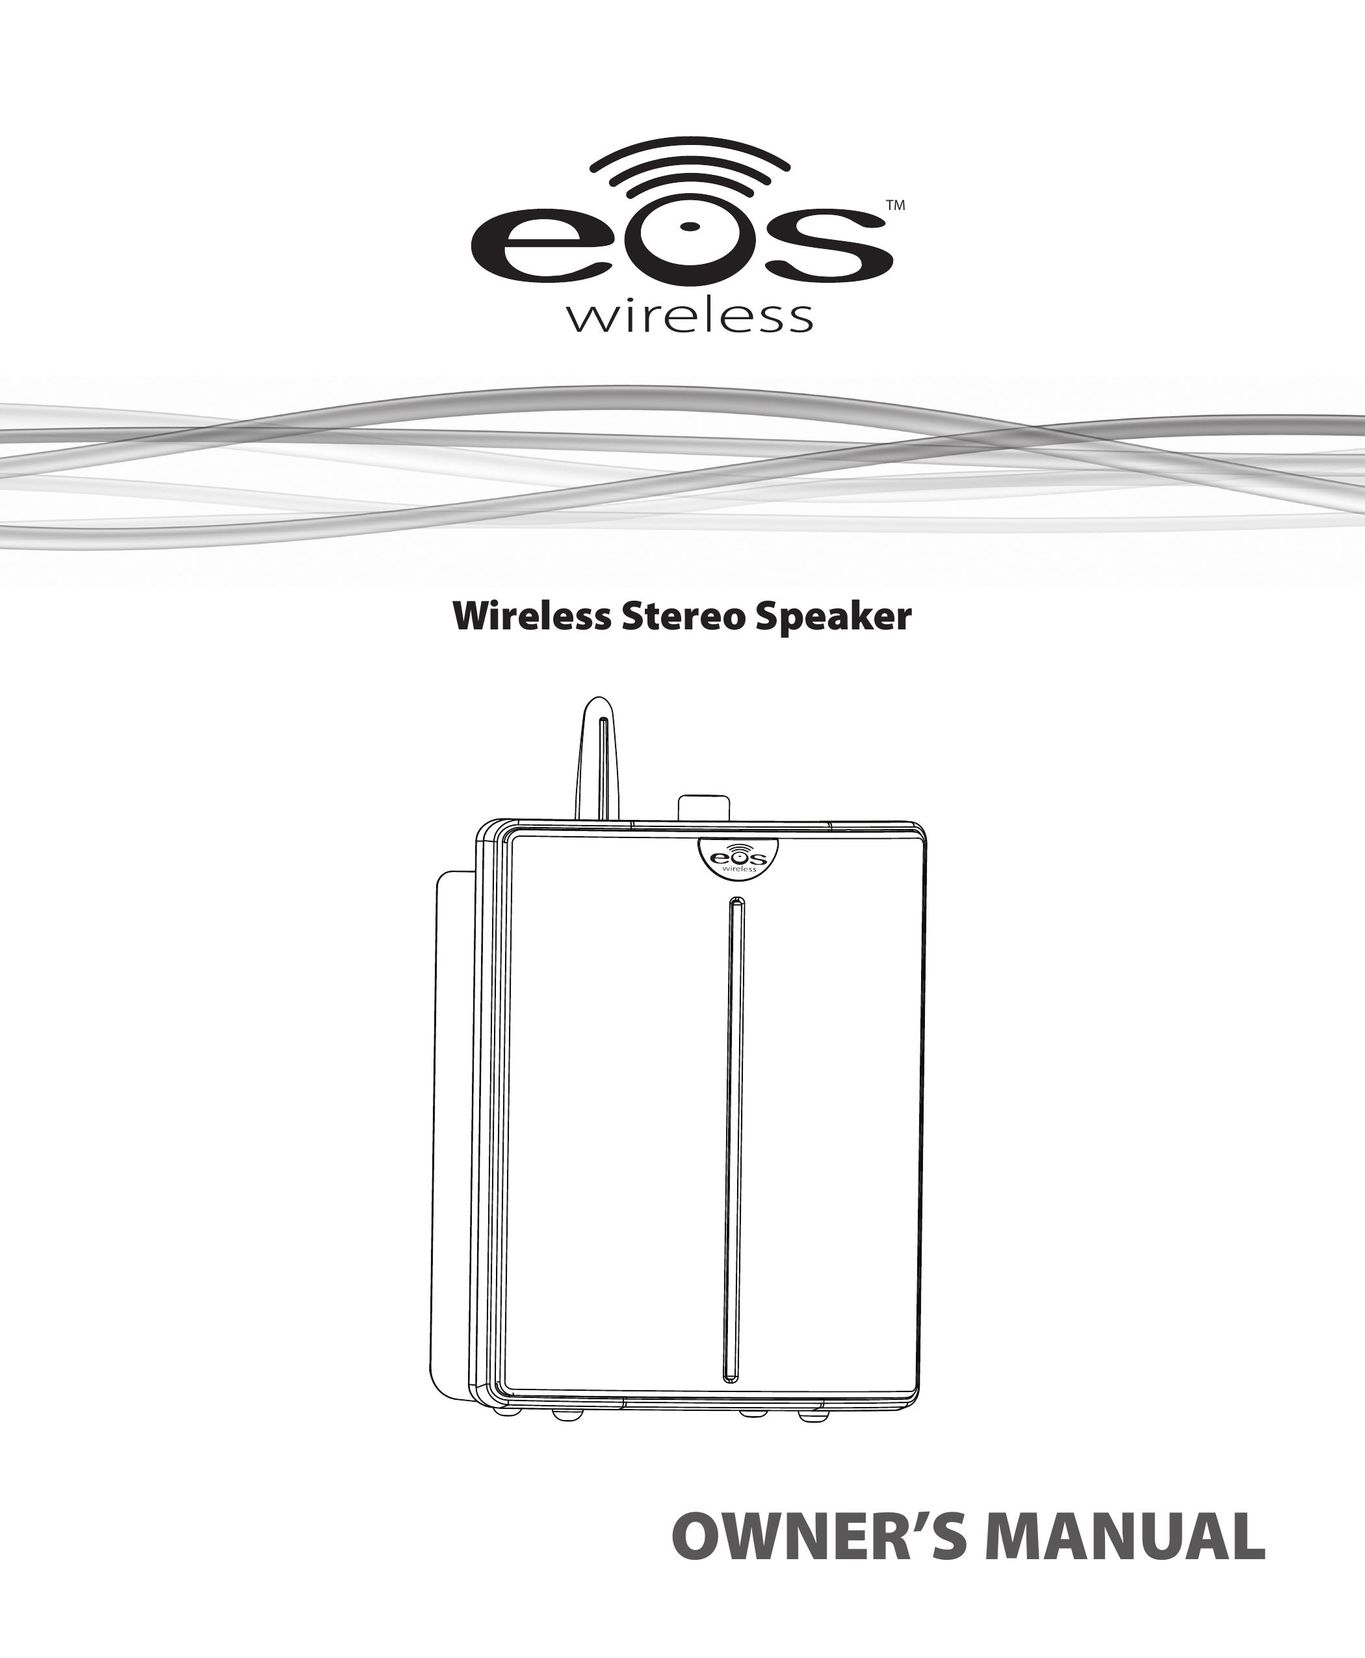 Eos Wireless Wireless Stereo Speaker Portable Speaker User Manual